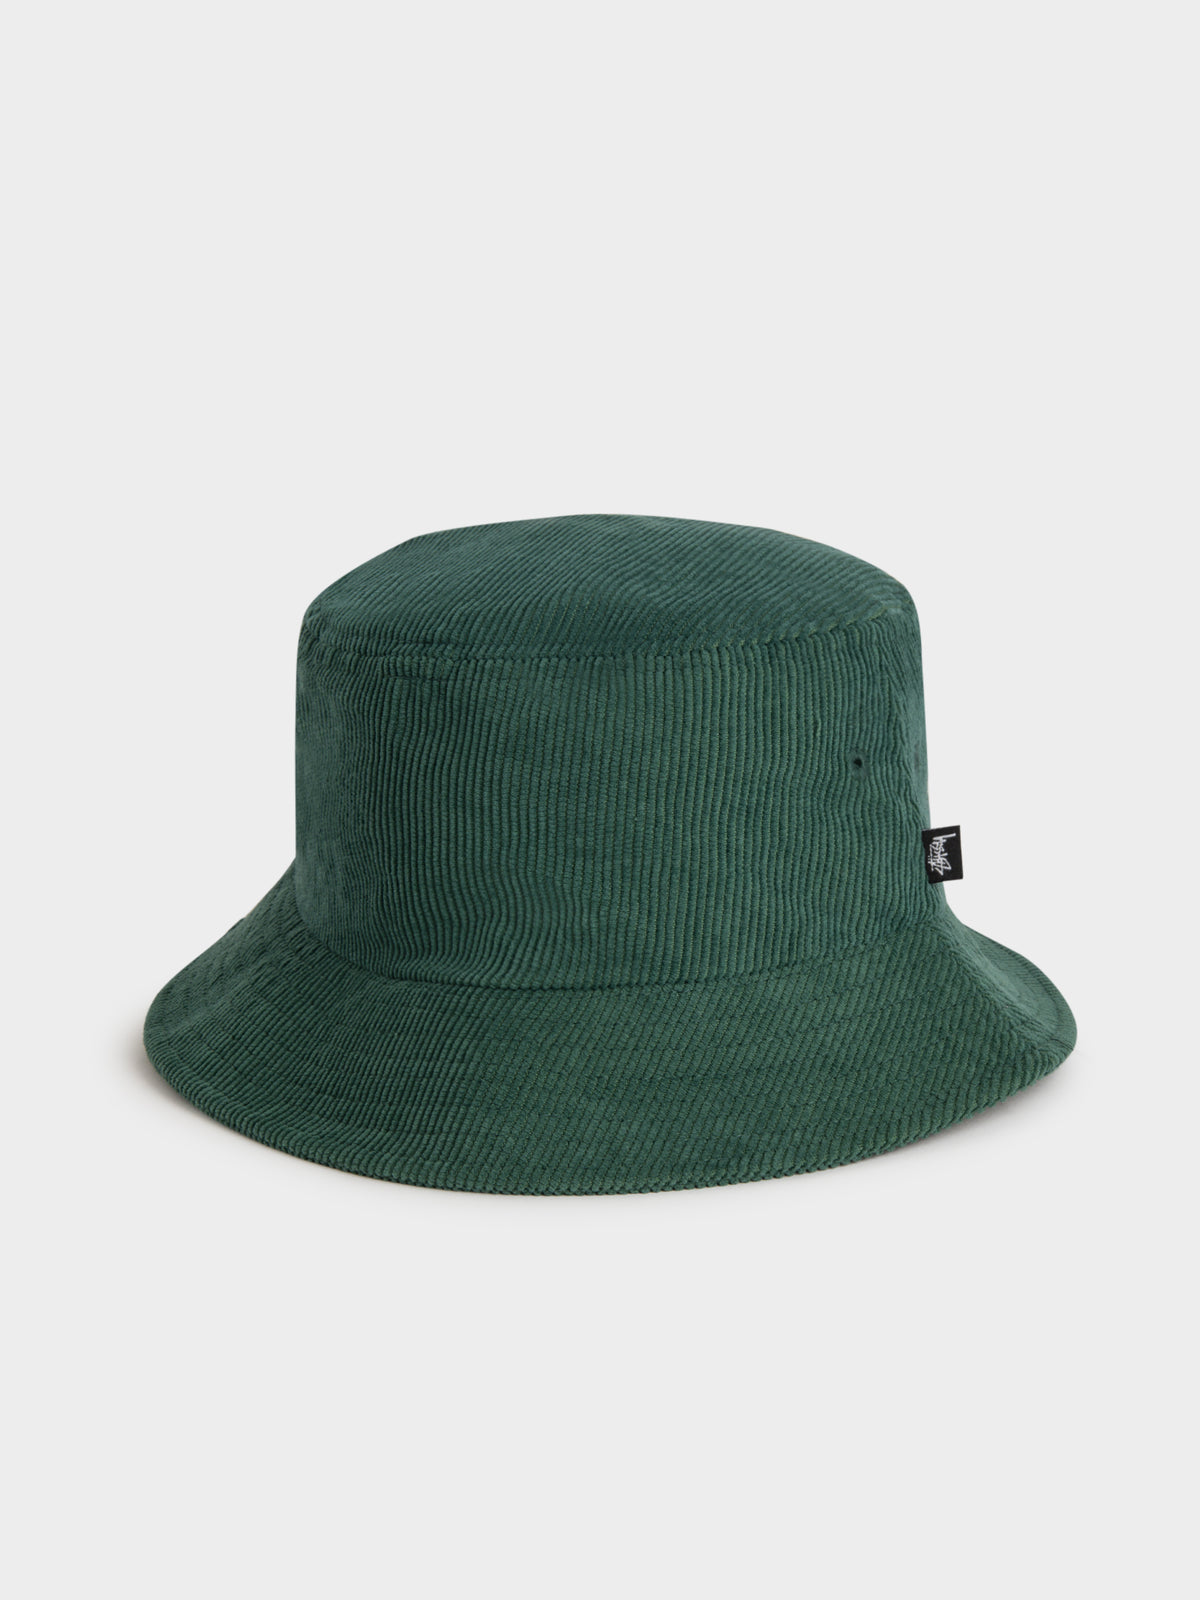 Graffiti Cord Bucket Hat in Green